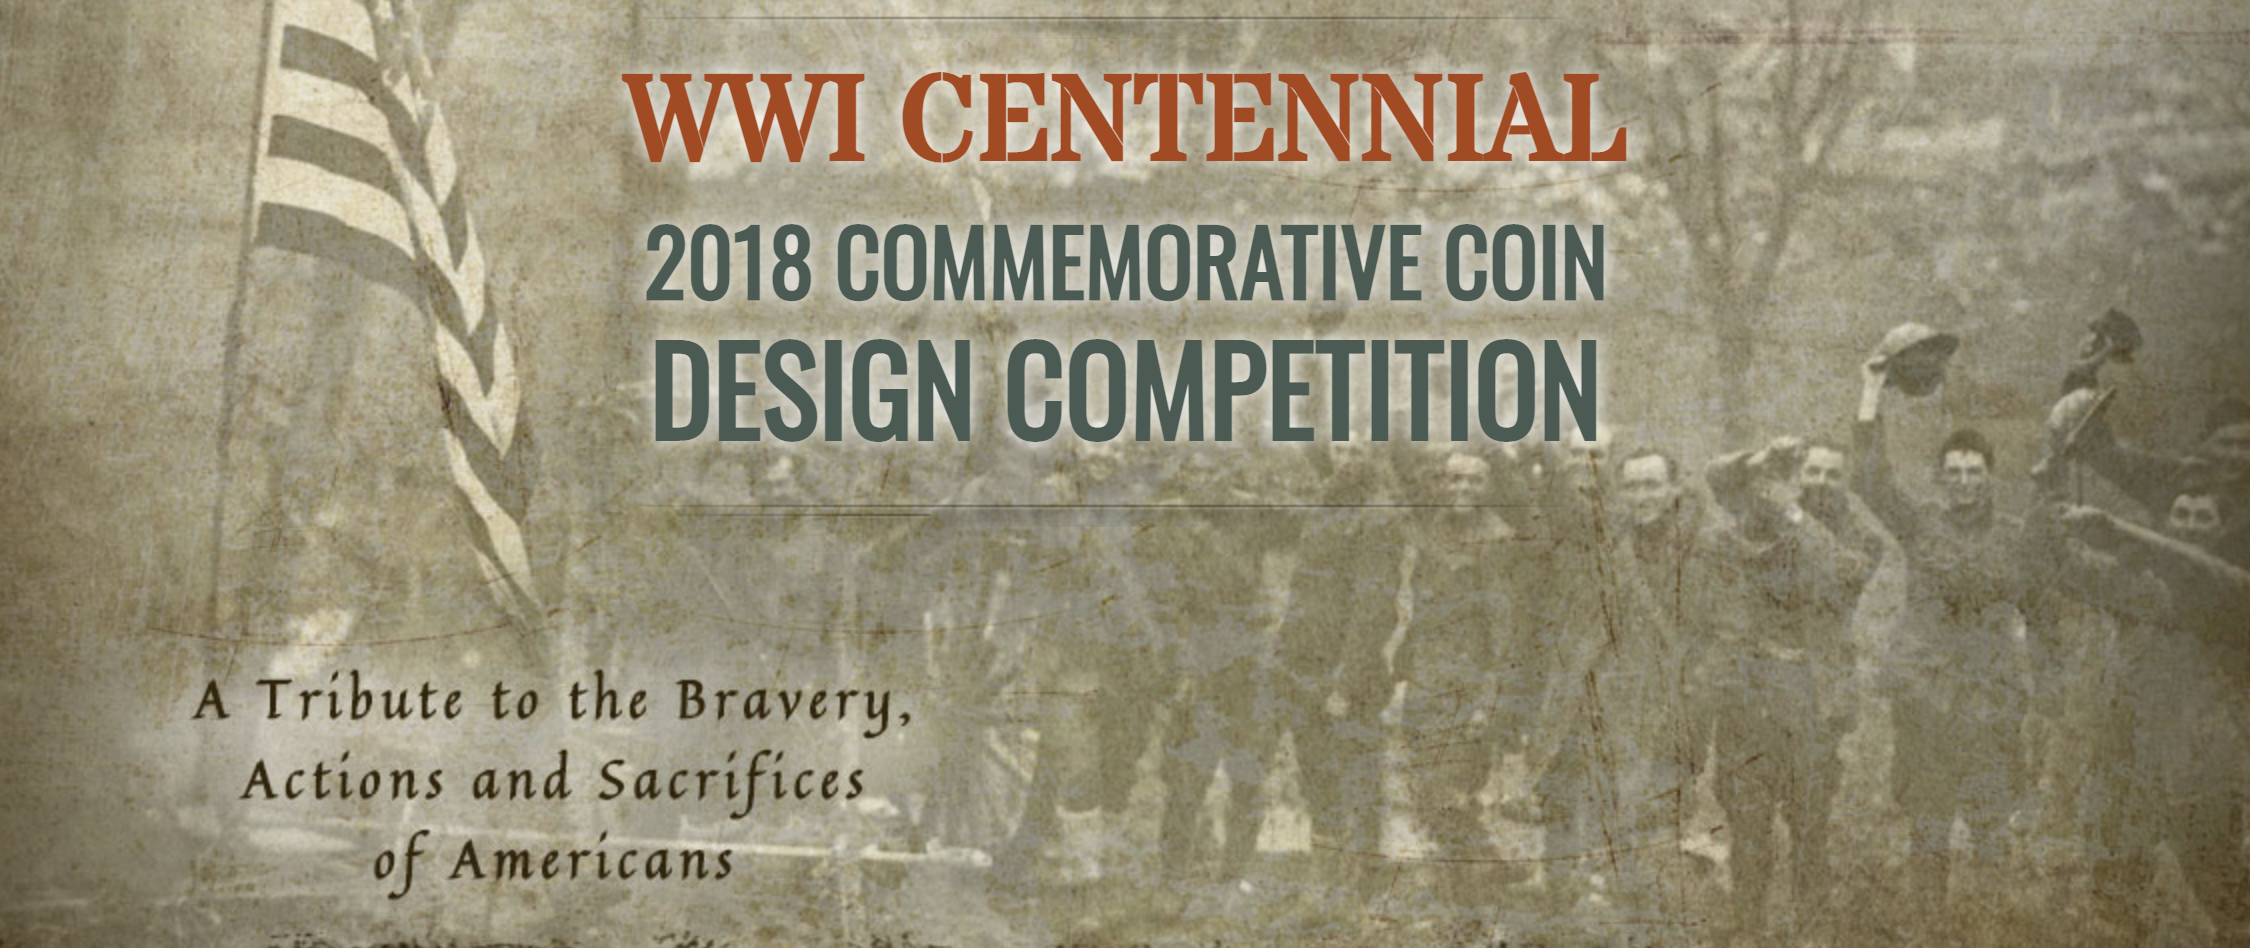 World War I Centennial 2018 Commemorative Coin Design Competition